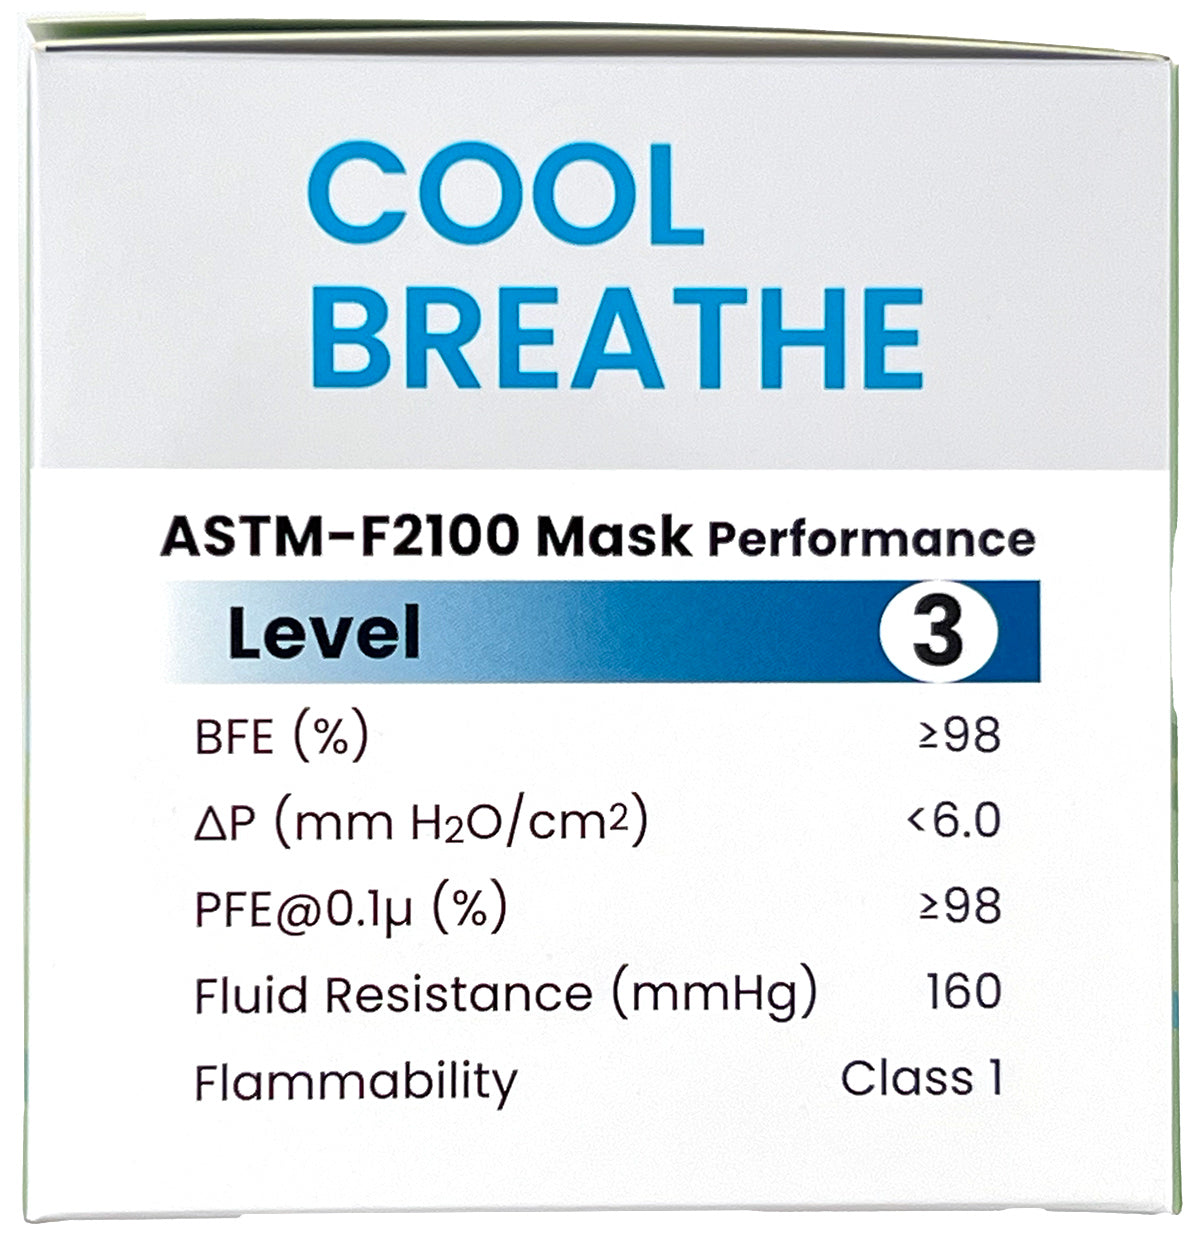 Maytex Cool Breathe Mask | Box Side ASTM Level 3 Information